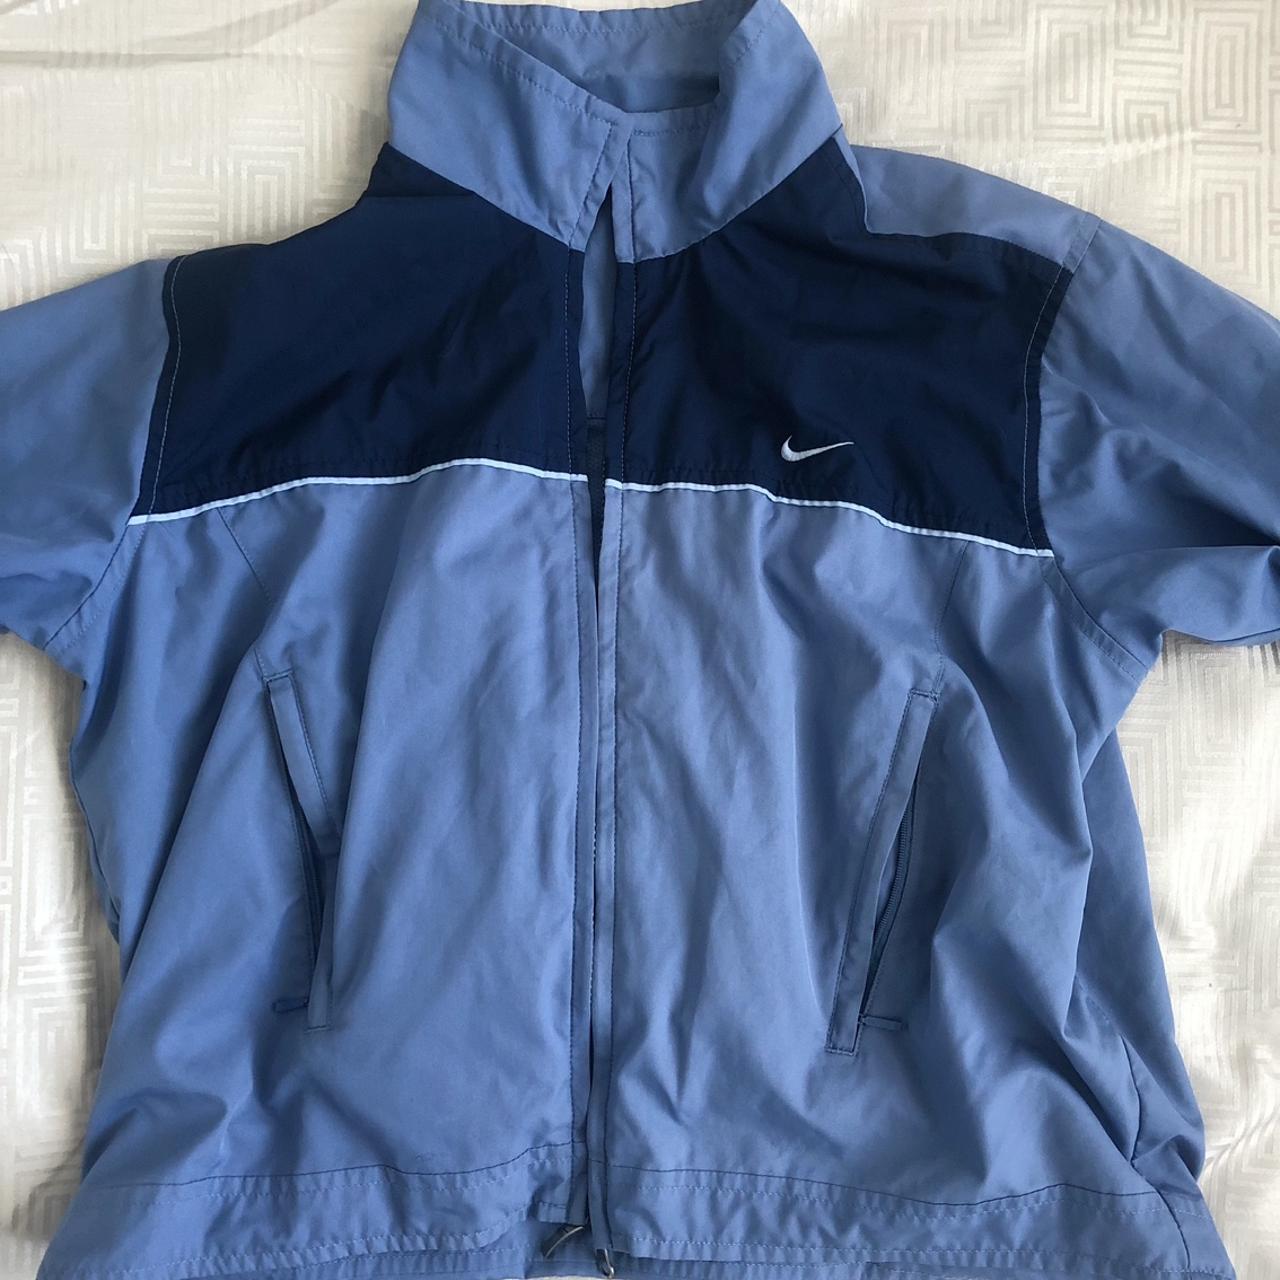 Nike Women's Blue and Navy Coat | Depop